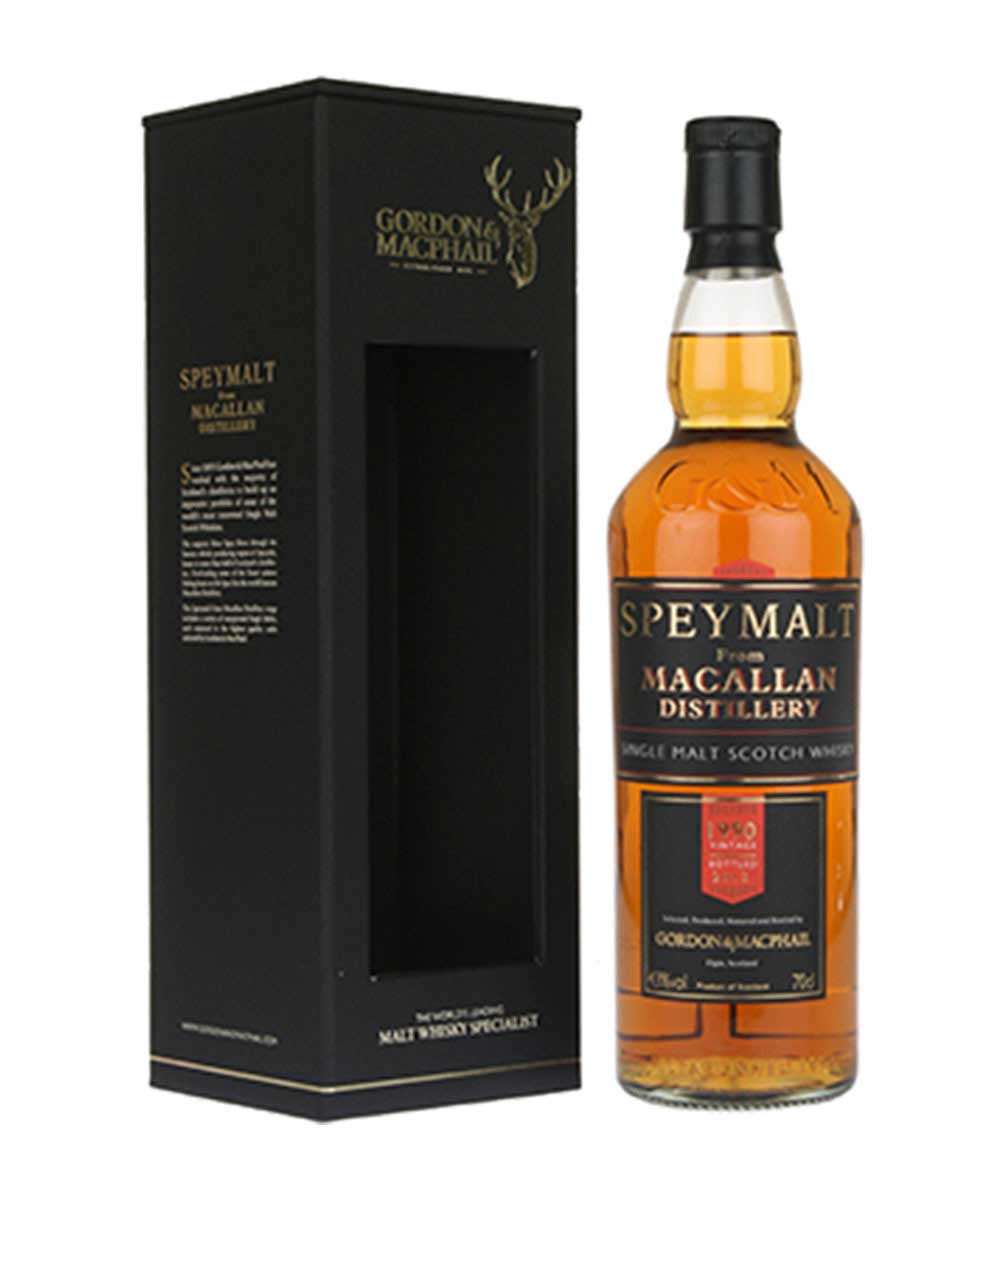 The Macallan Speymalt 21 Year Old Single Malt Scotch Whisky